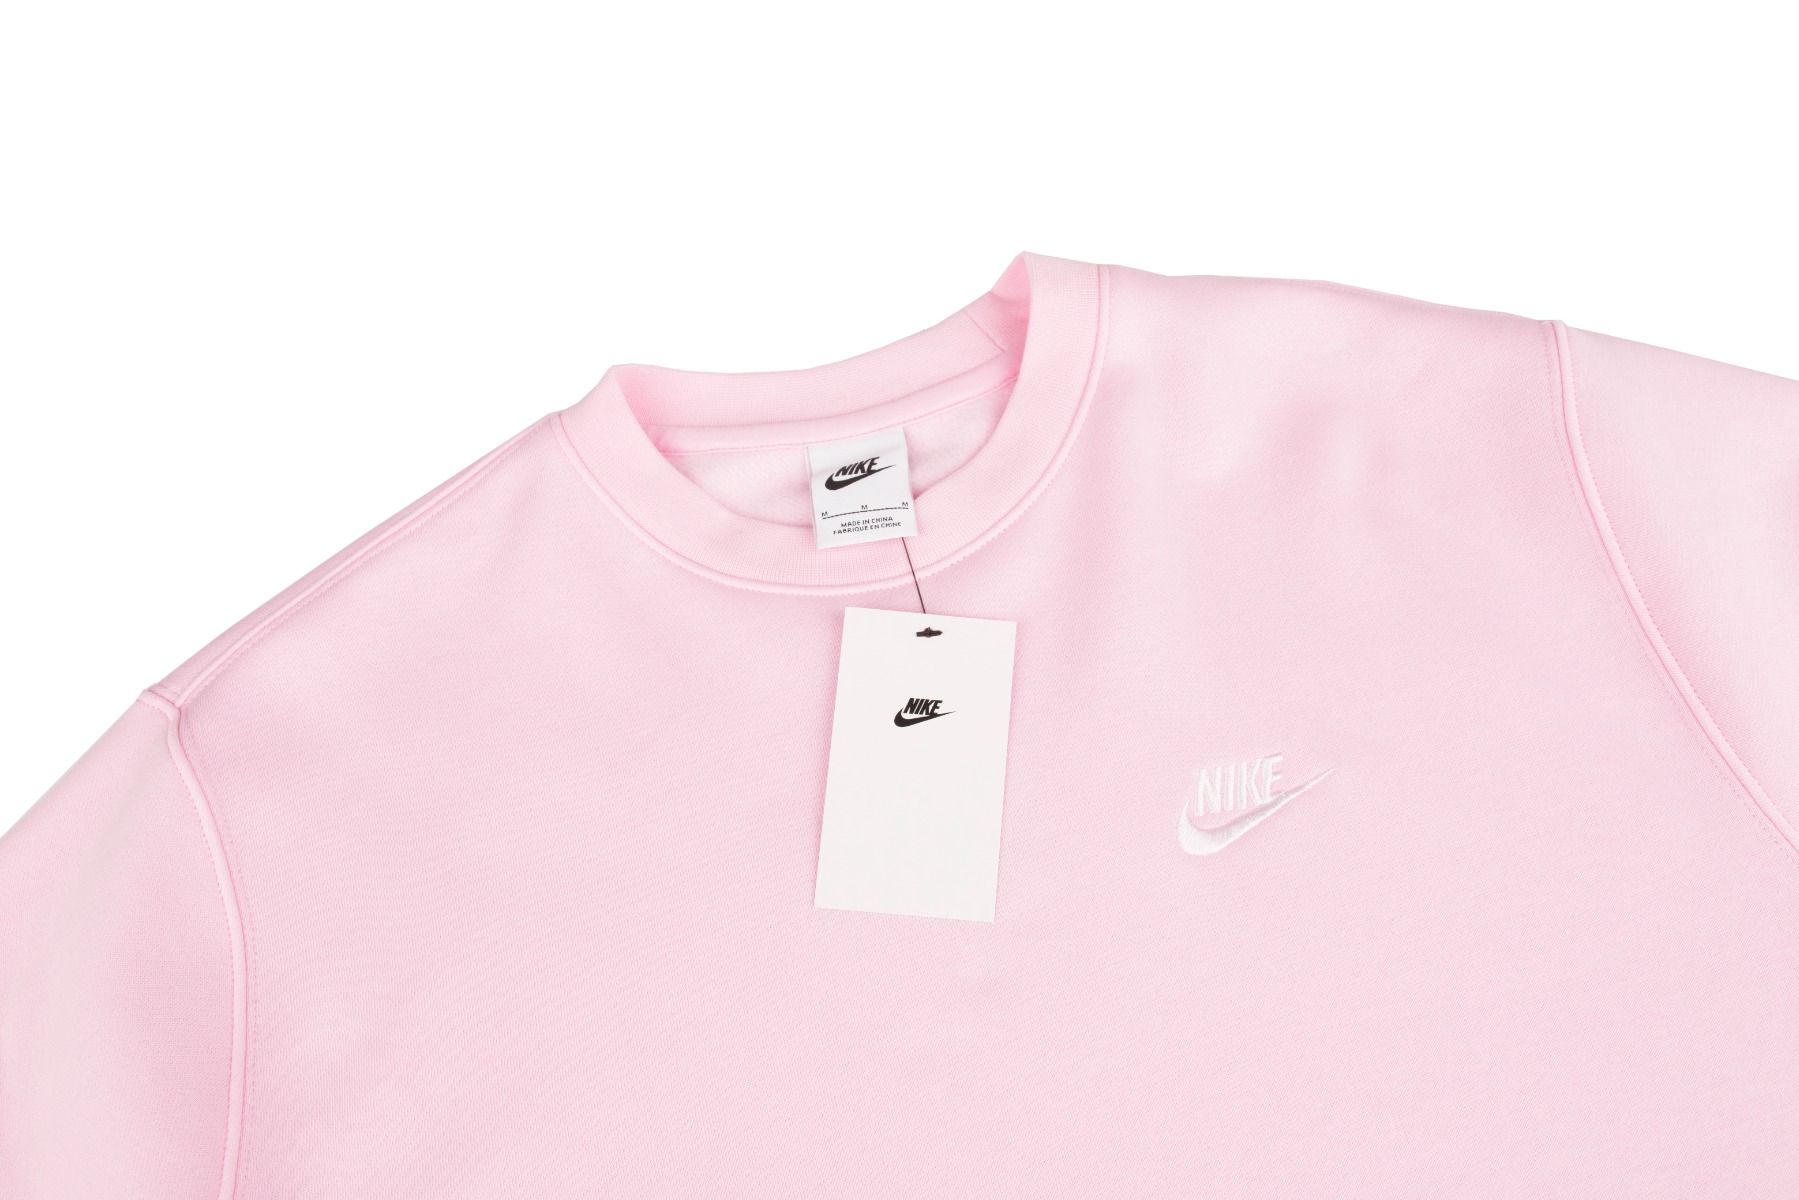 Nike bluză bărbați NSW Club Crew BB BV2662 663